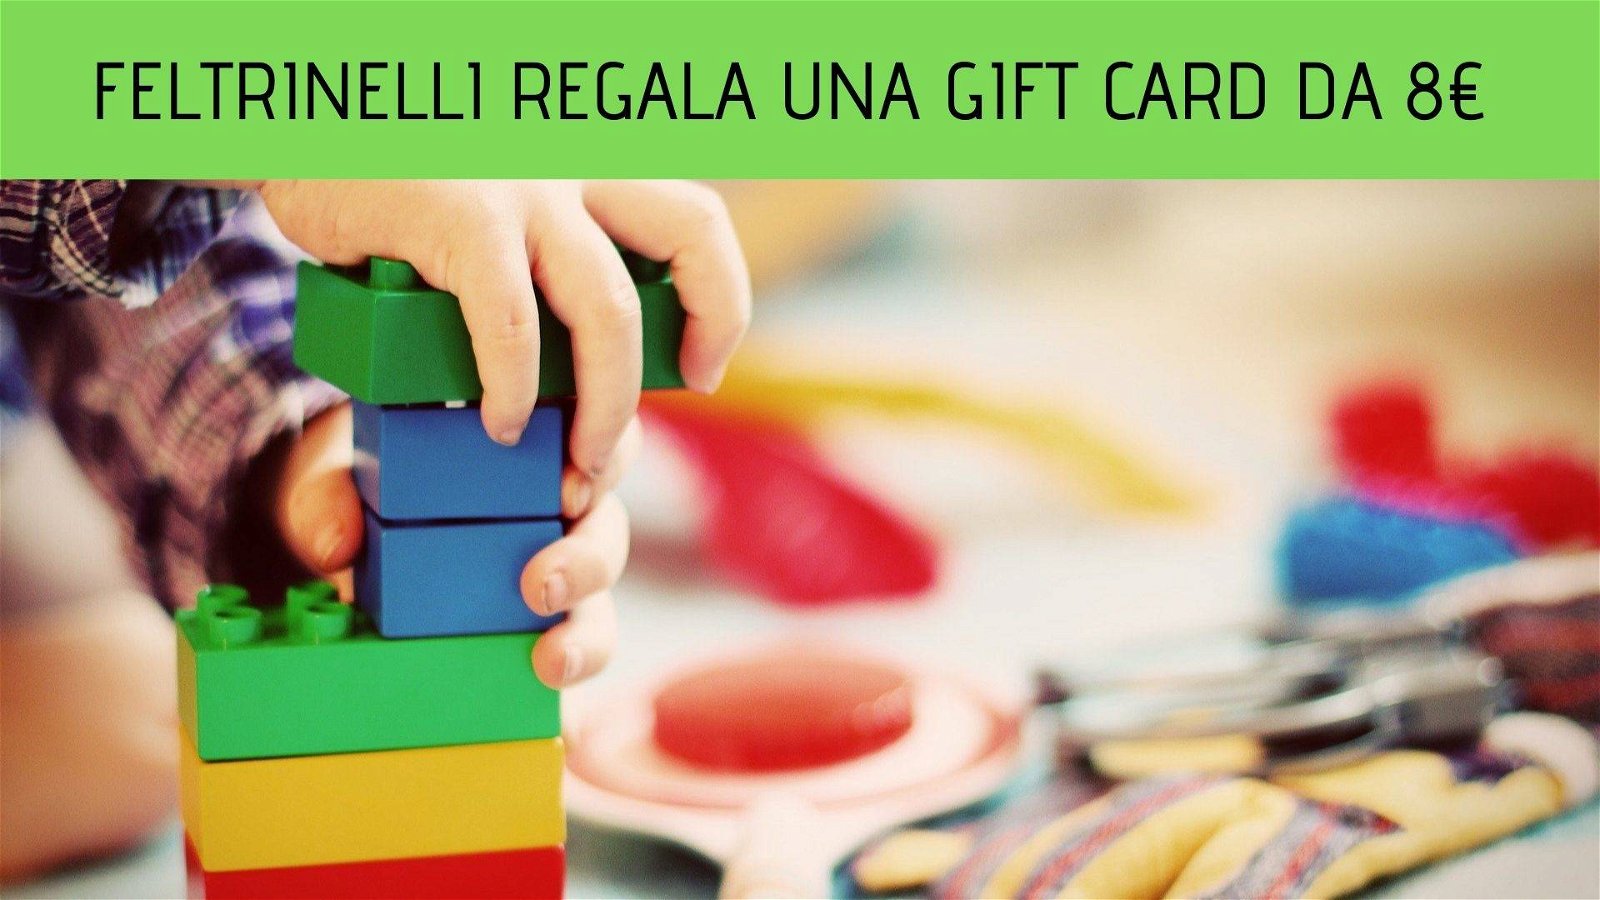 Immagine di Feltrinelli: in regalo una gift card da 8€ con una spesa di 50€